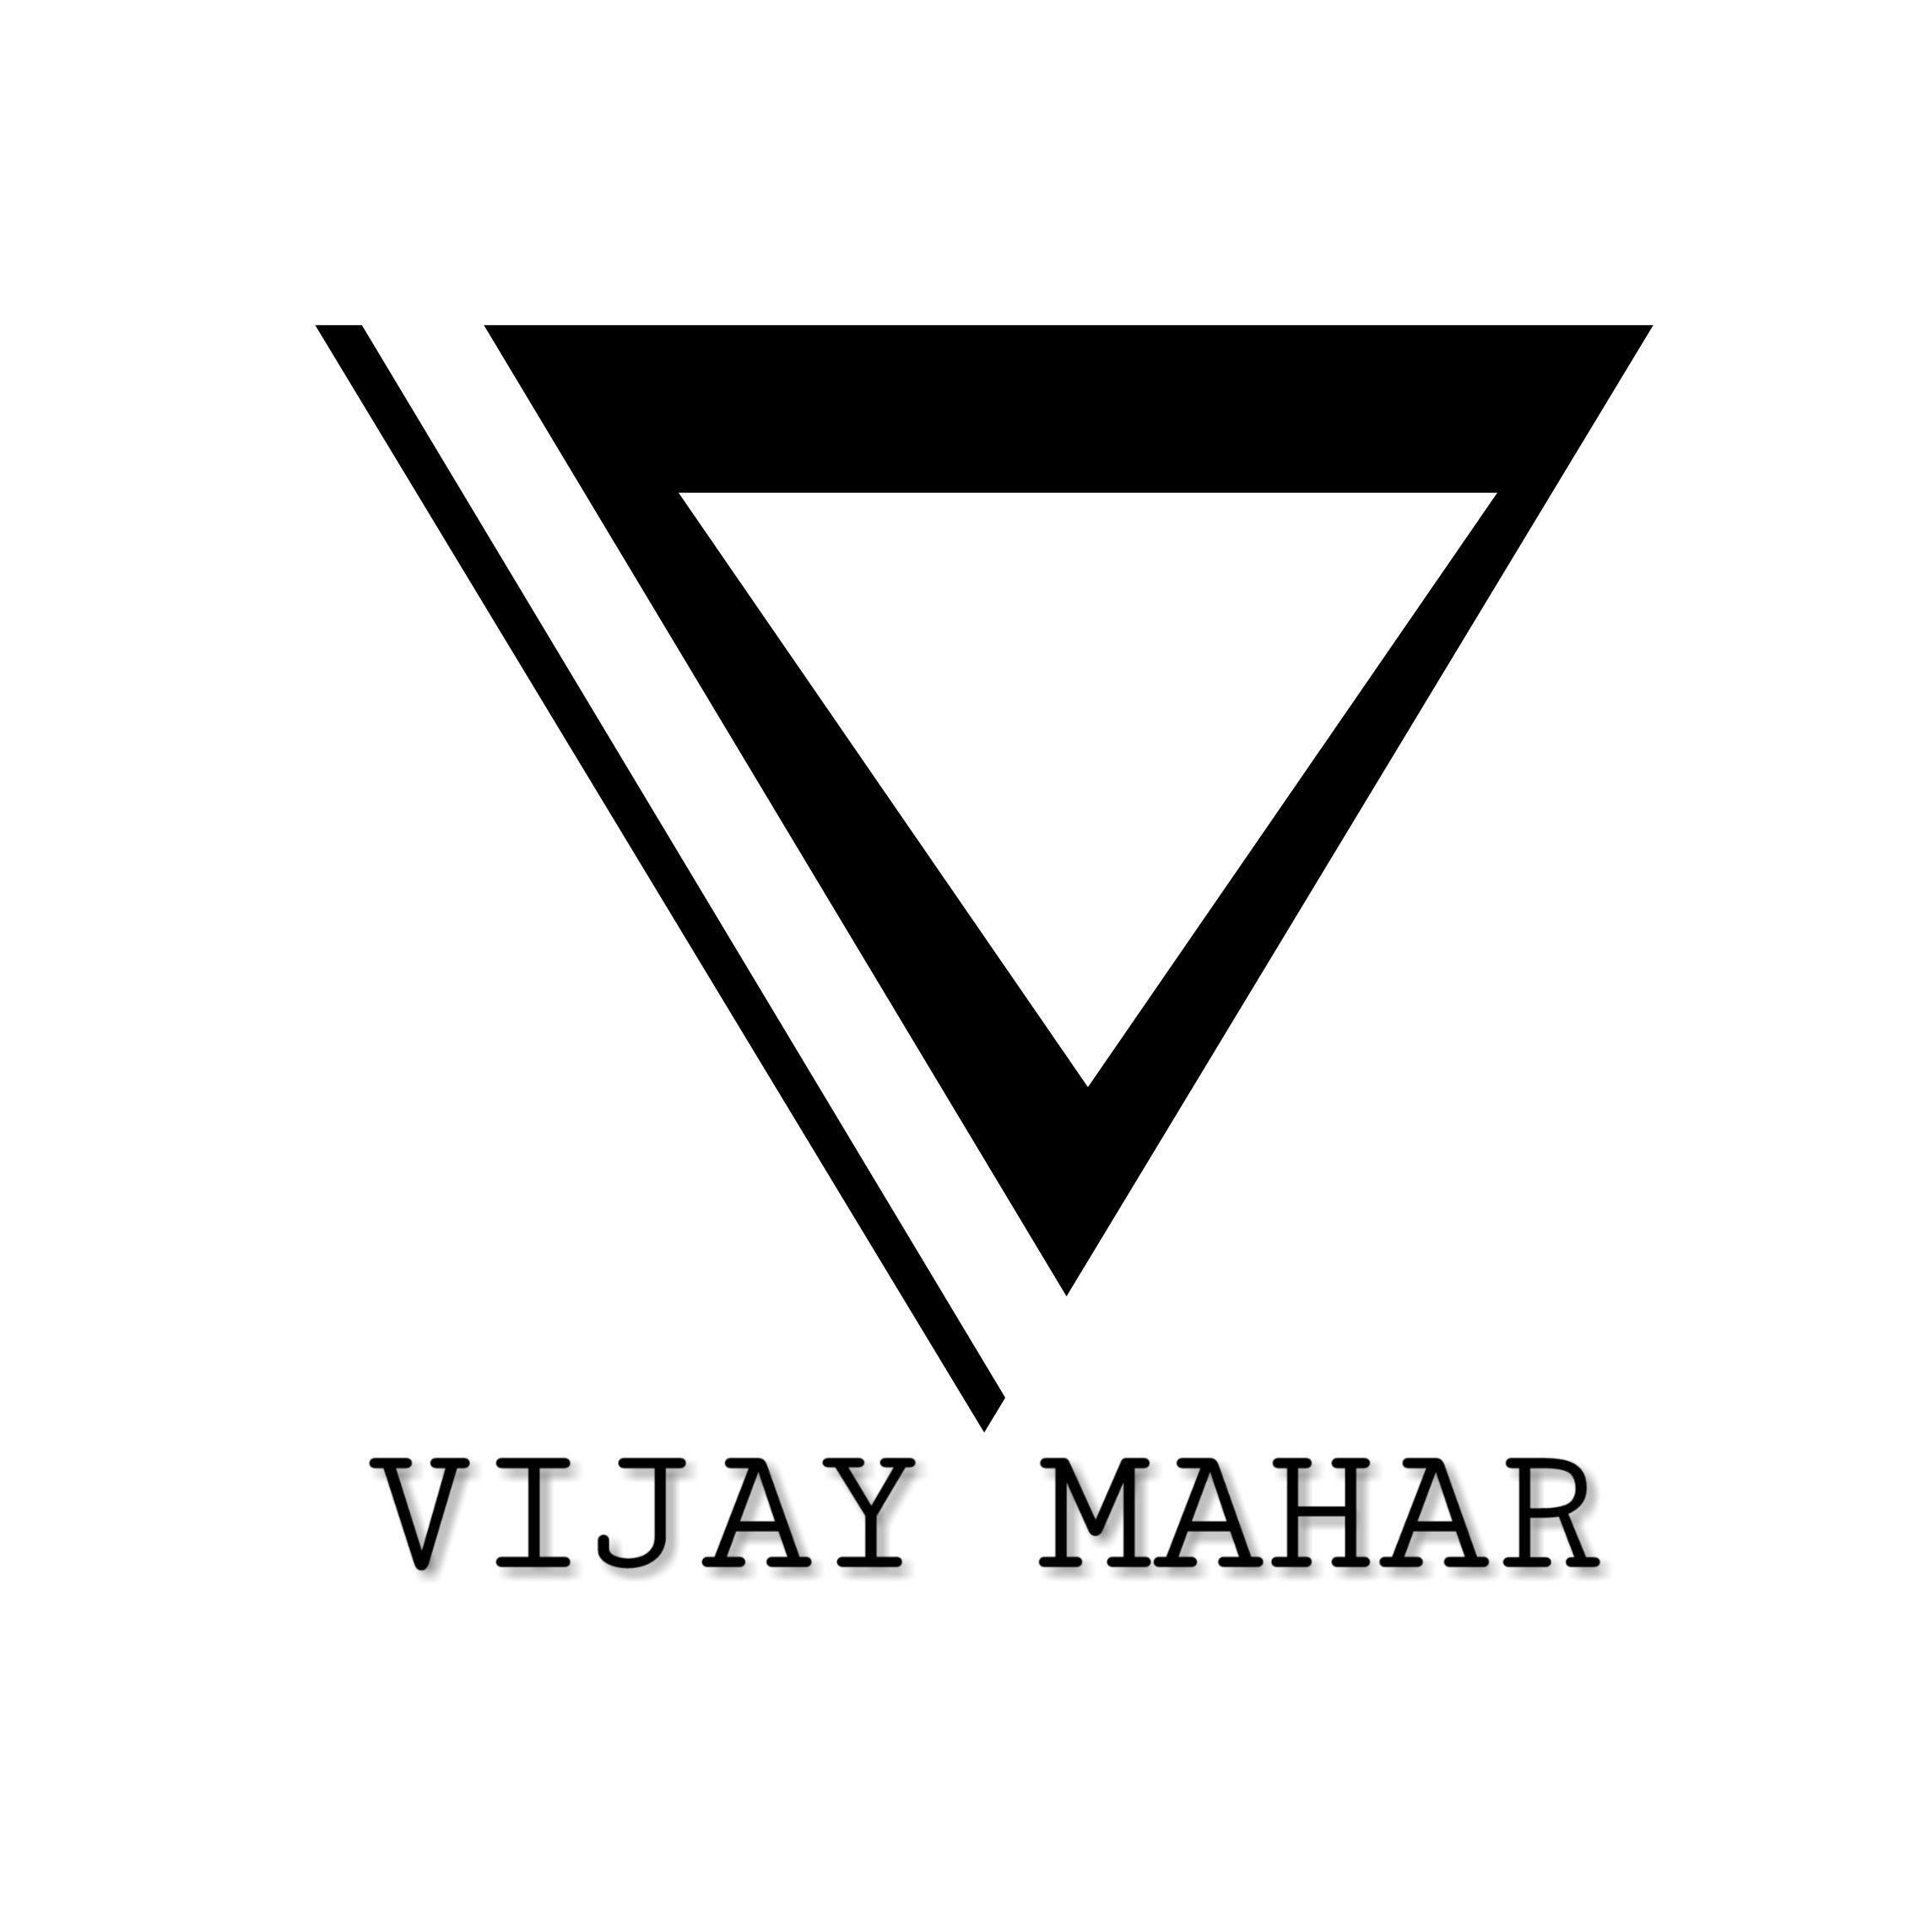 Discover the coolest Vijay Mahar logo #freetoedit image. Photohop logo, Photography name logo, Photohop digital background